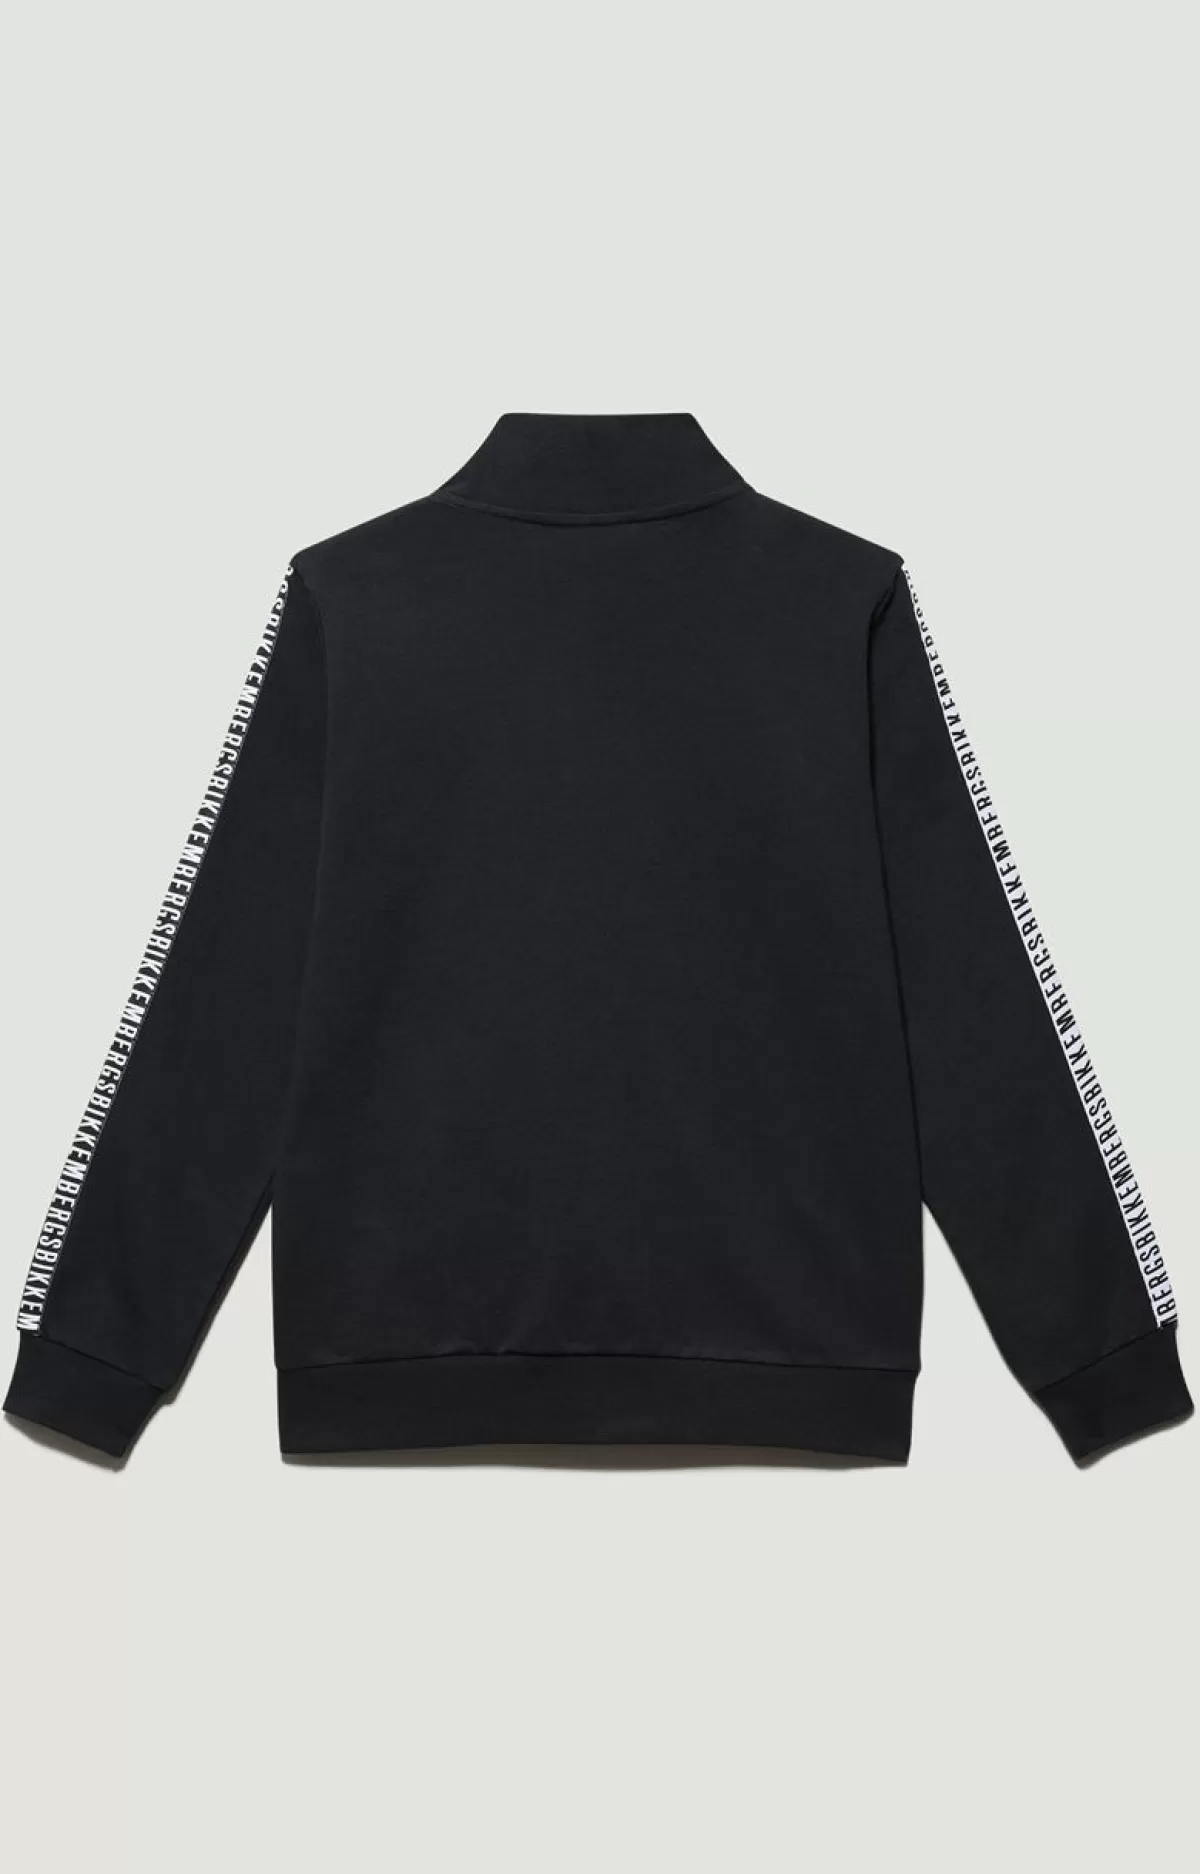 Bikkembergs Boys' Zip Sweatshirt Black Outlet